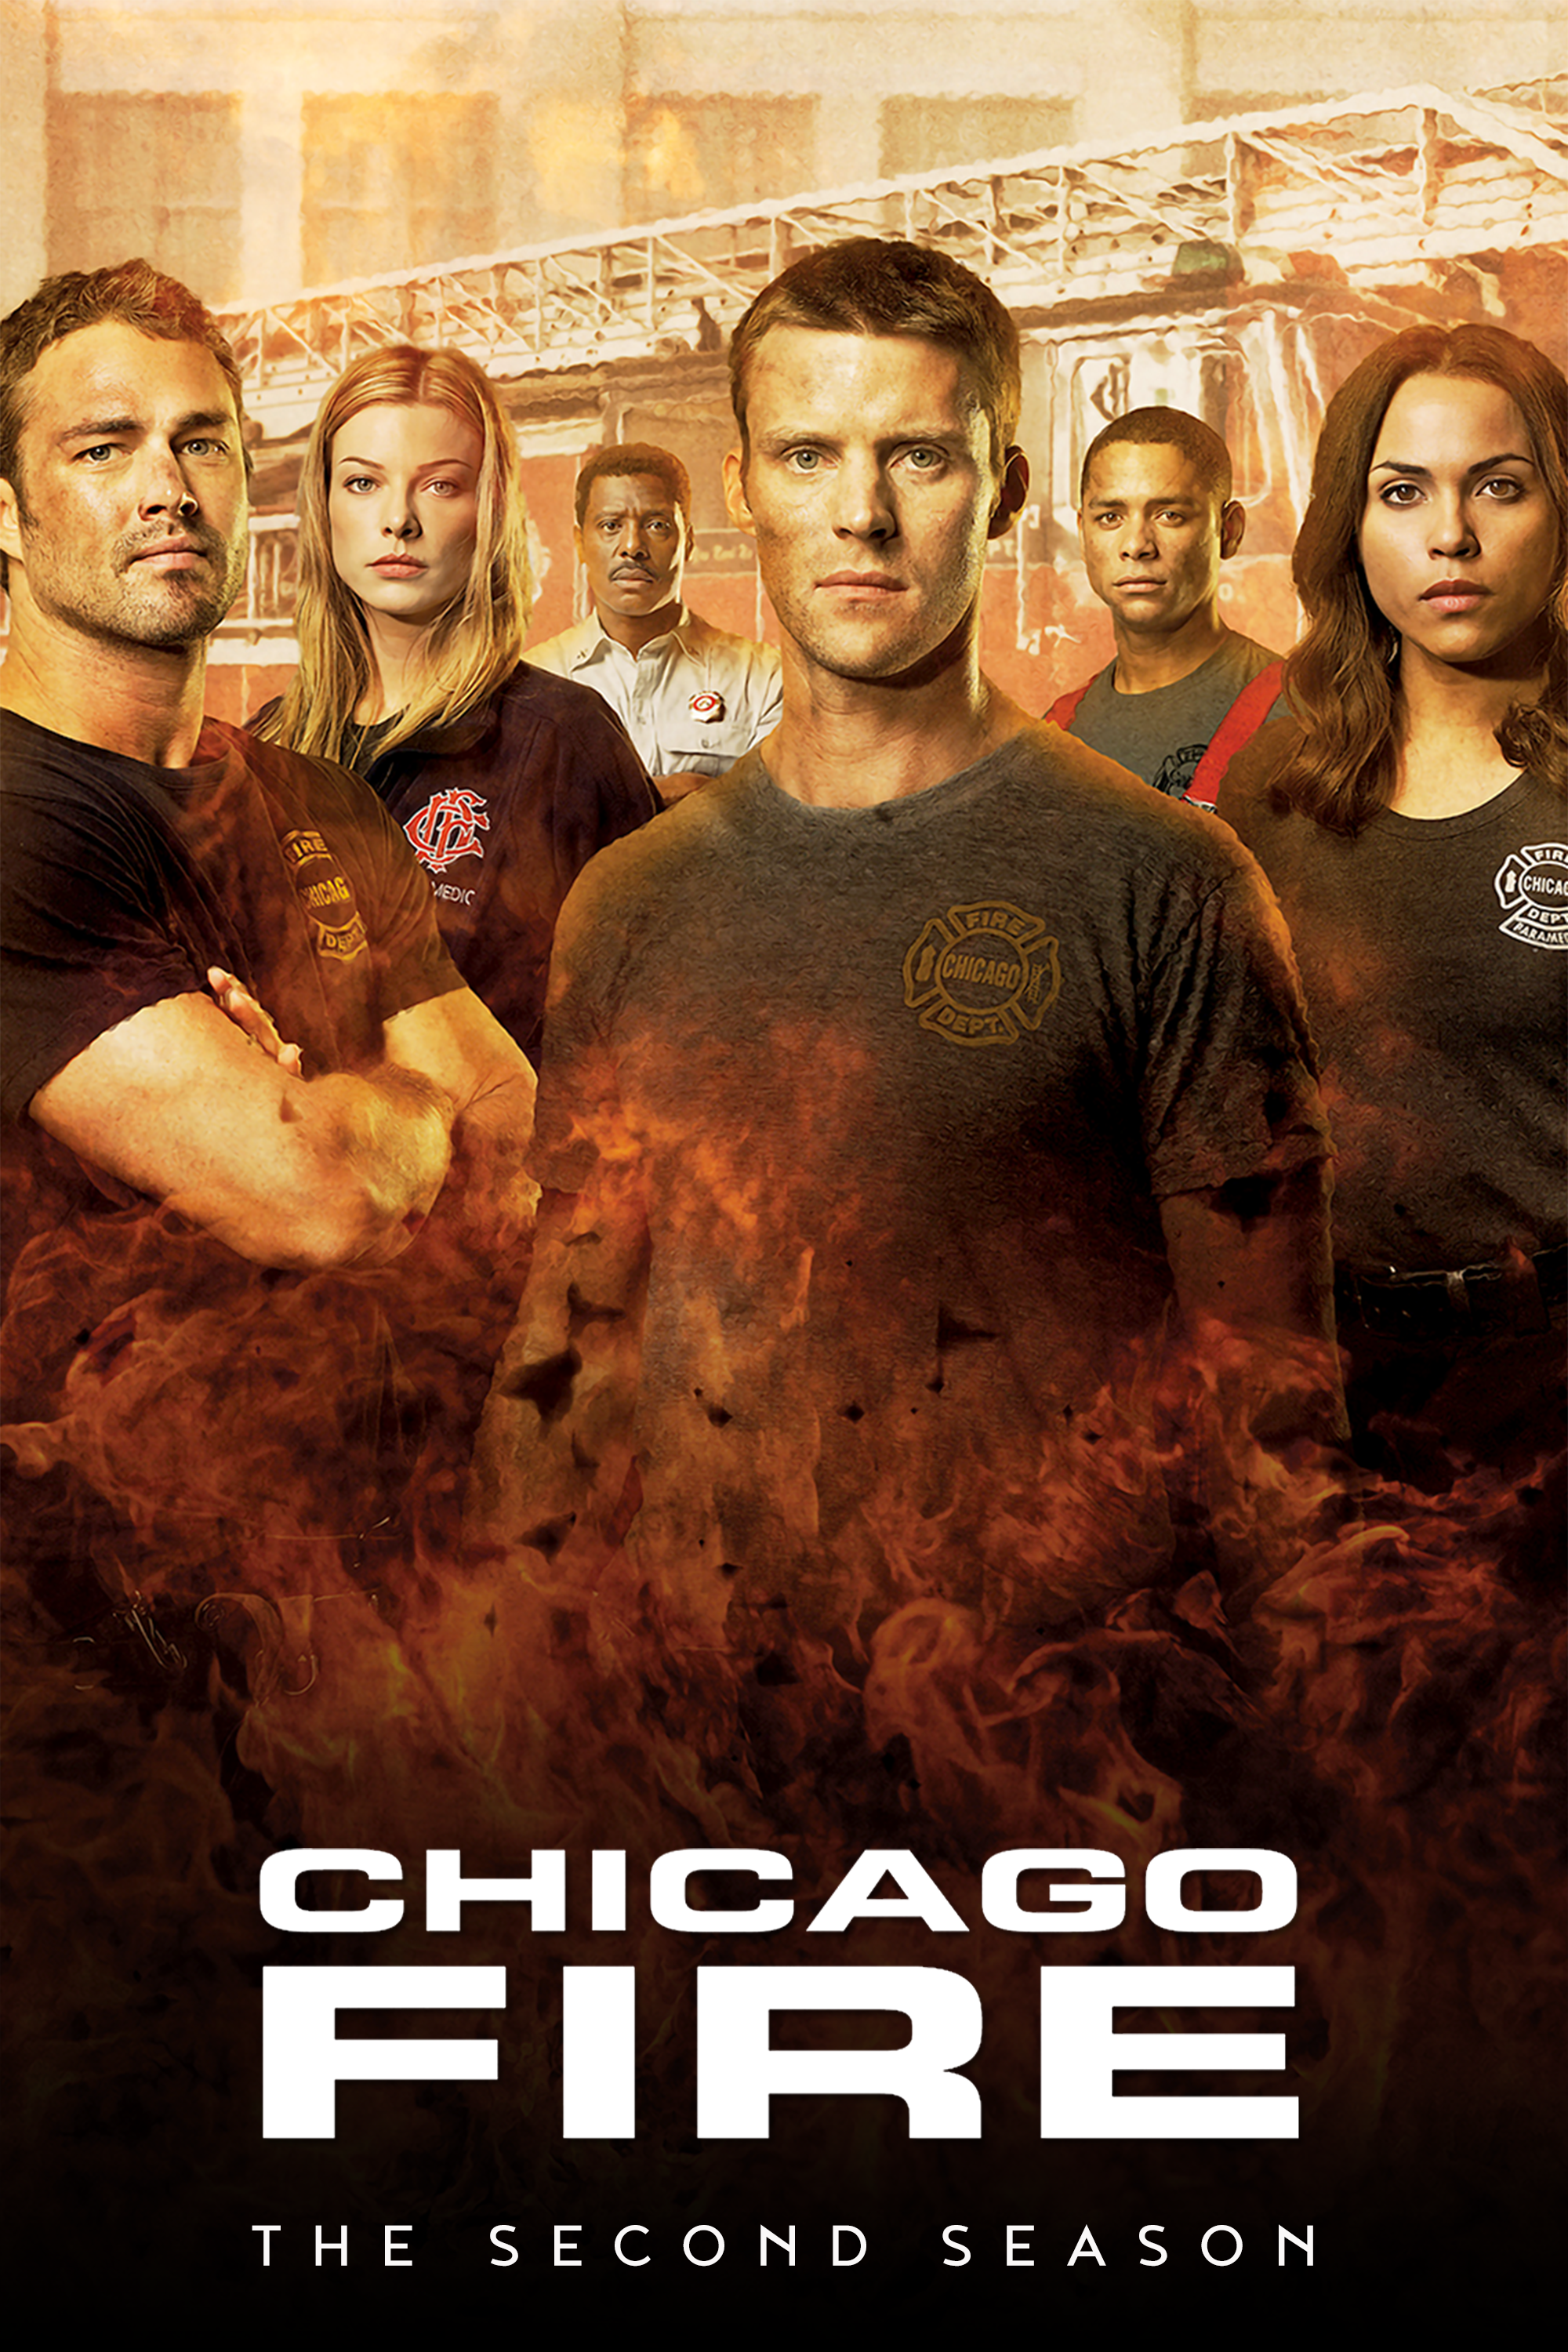 Chicago Fire (TV Series 2012– ) - “Cast” credits - IMDb